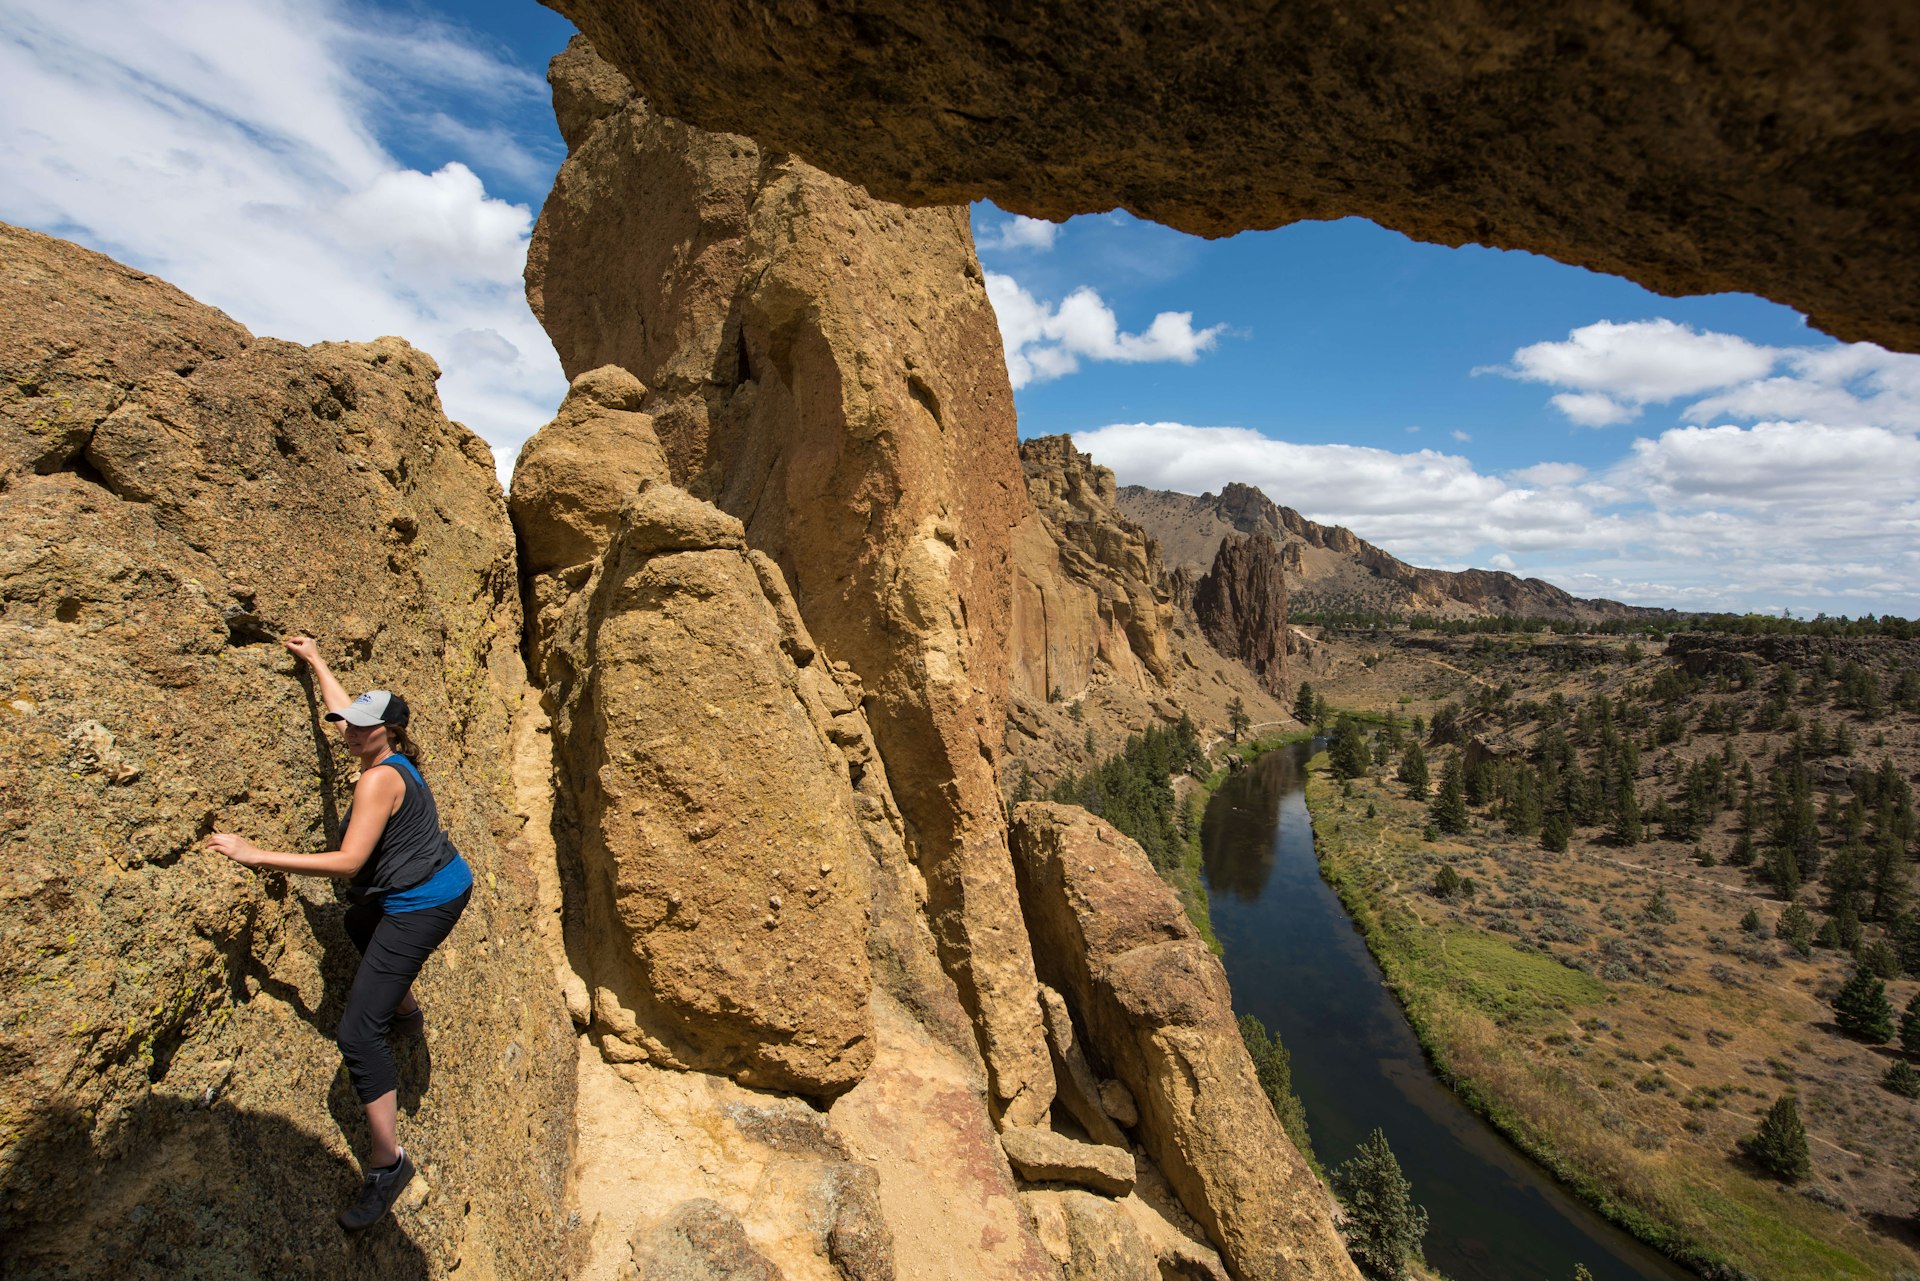 A woman free-climbing at Smith Rock State Park near Bend, Oregon